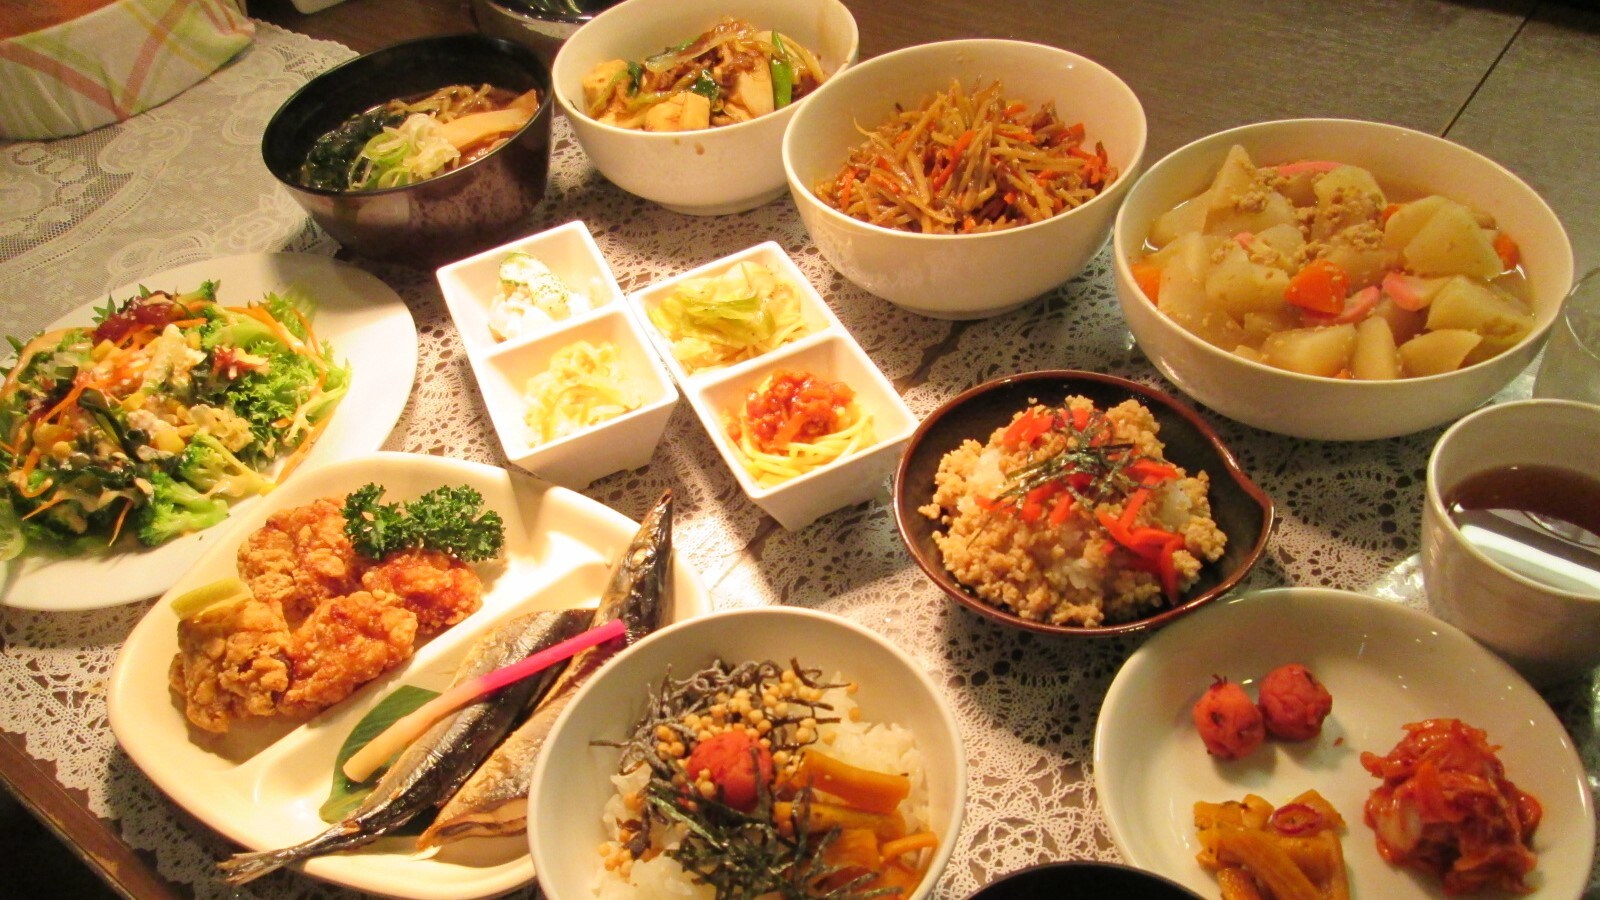 ◇ Dinner restaurant "Hanachaya" Daily buffet example ◇